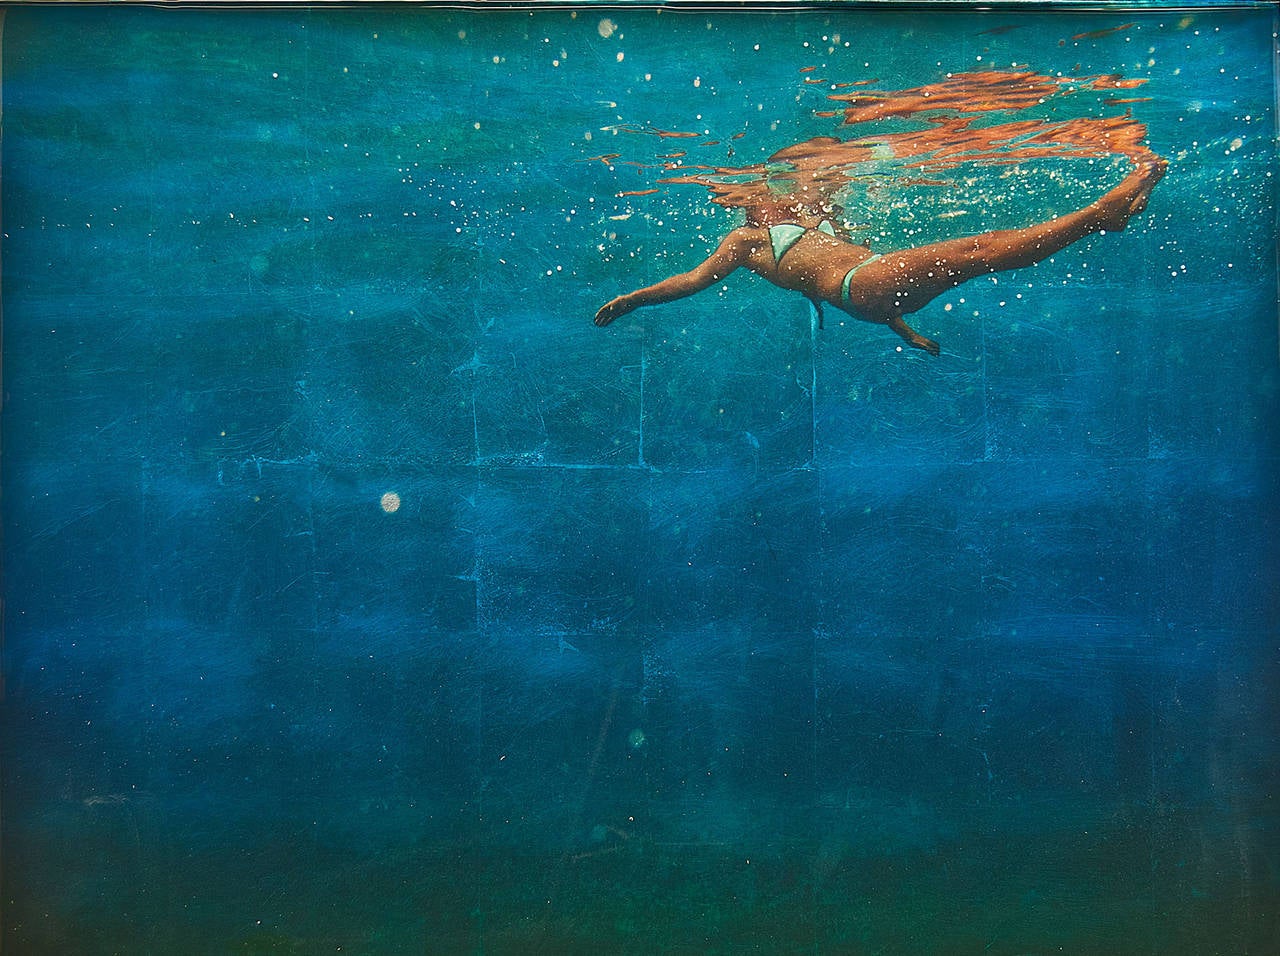 AWE, women with body underwater, shades of blue, shades of green, bright bikini - Mixed Media Art by Eric Zener